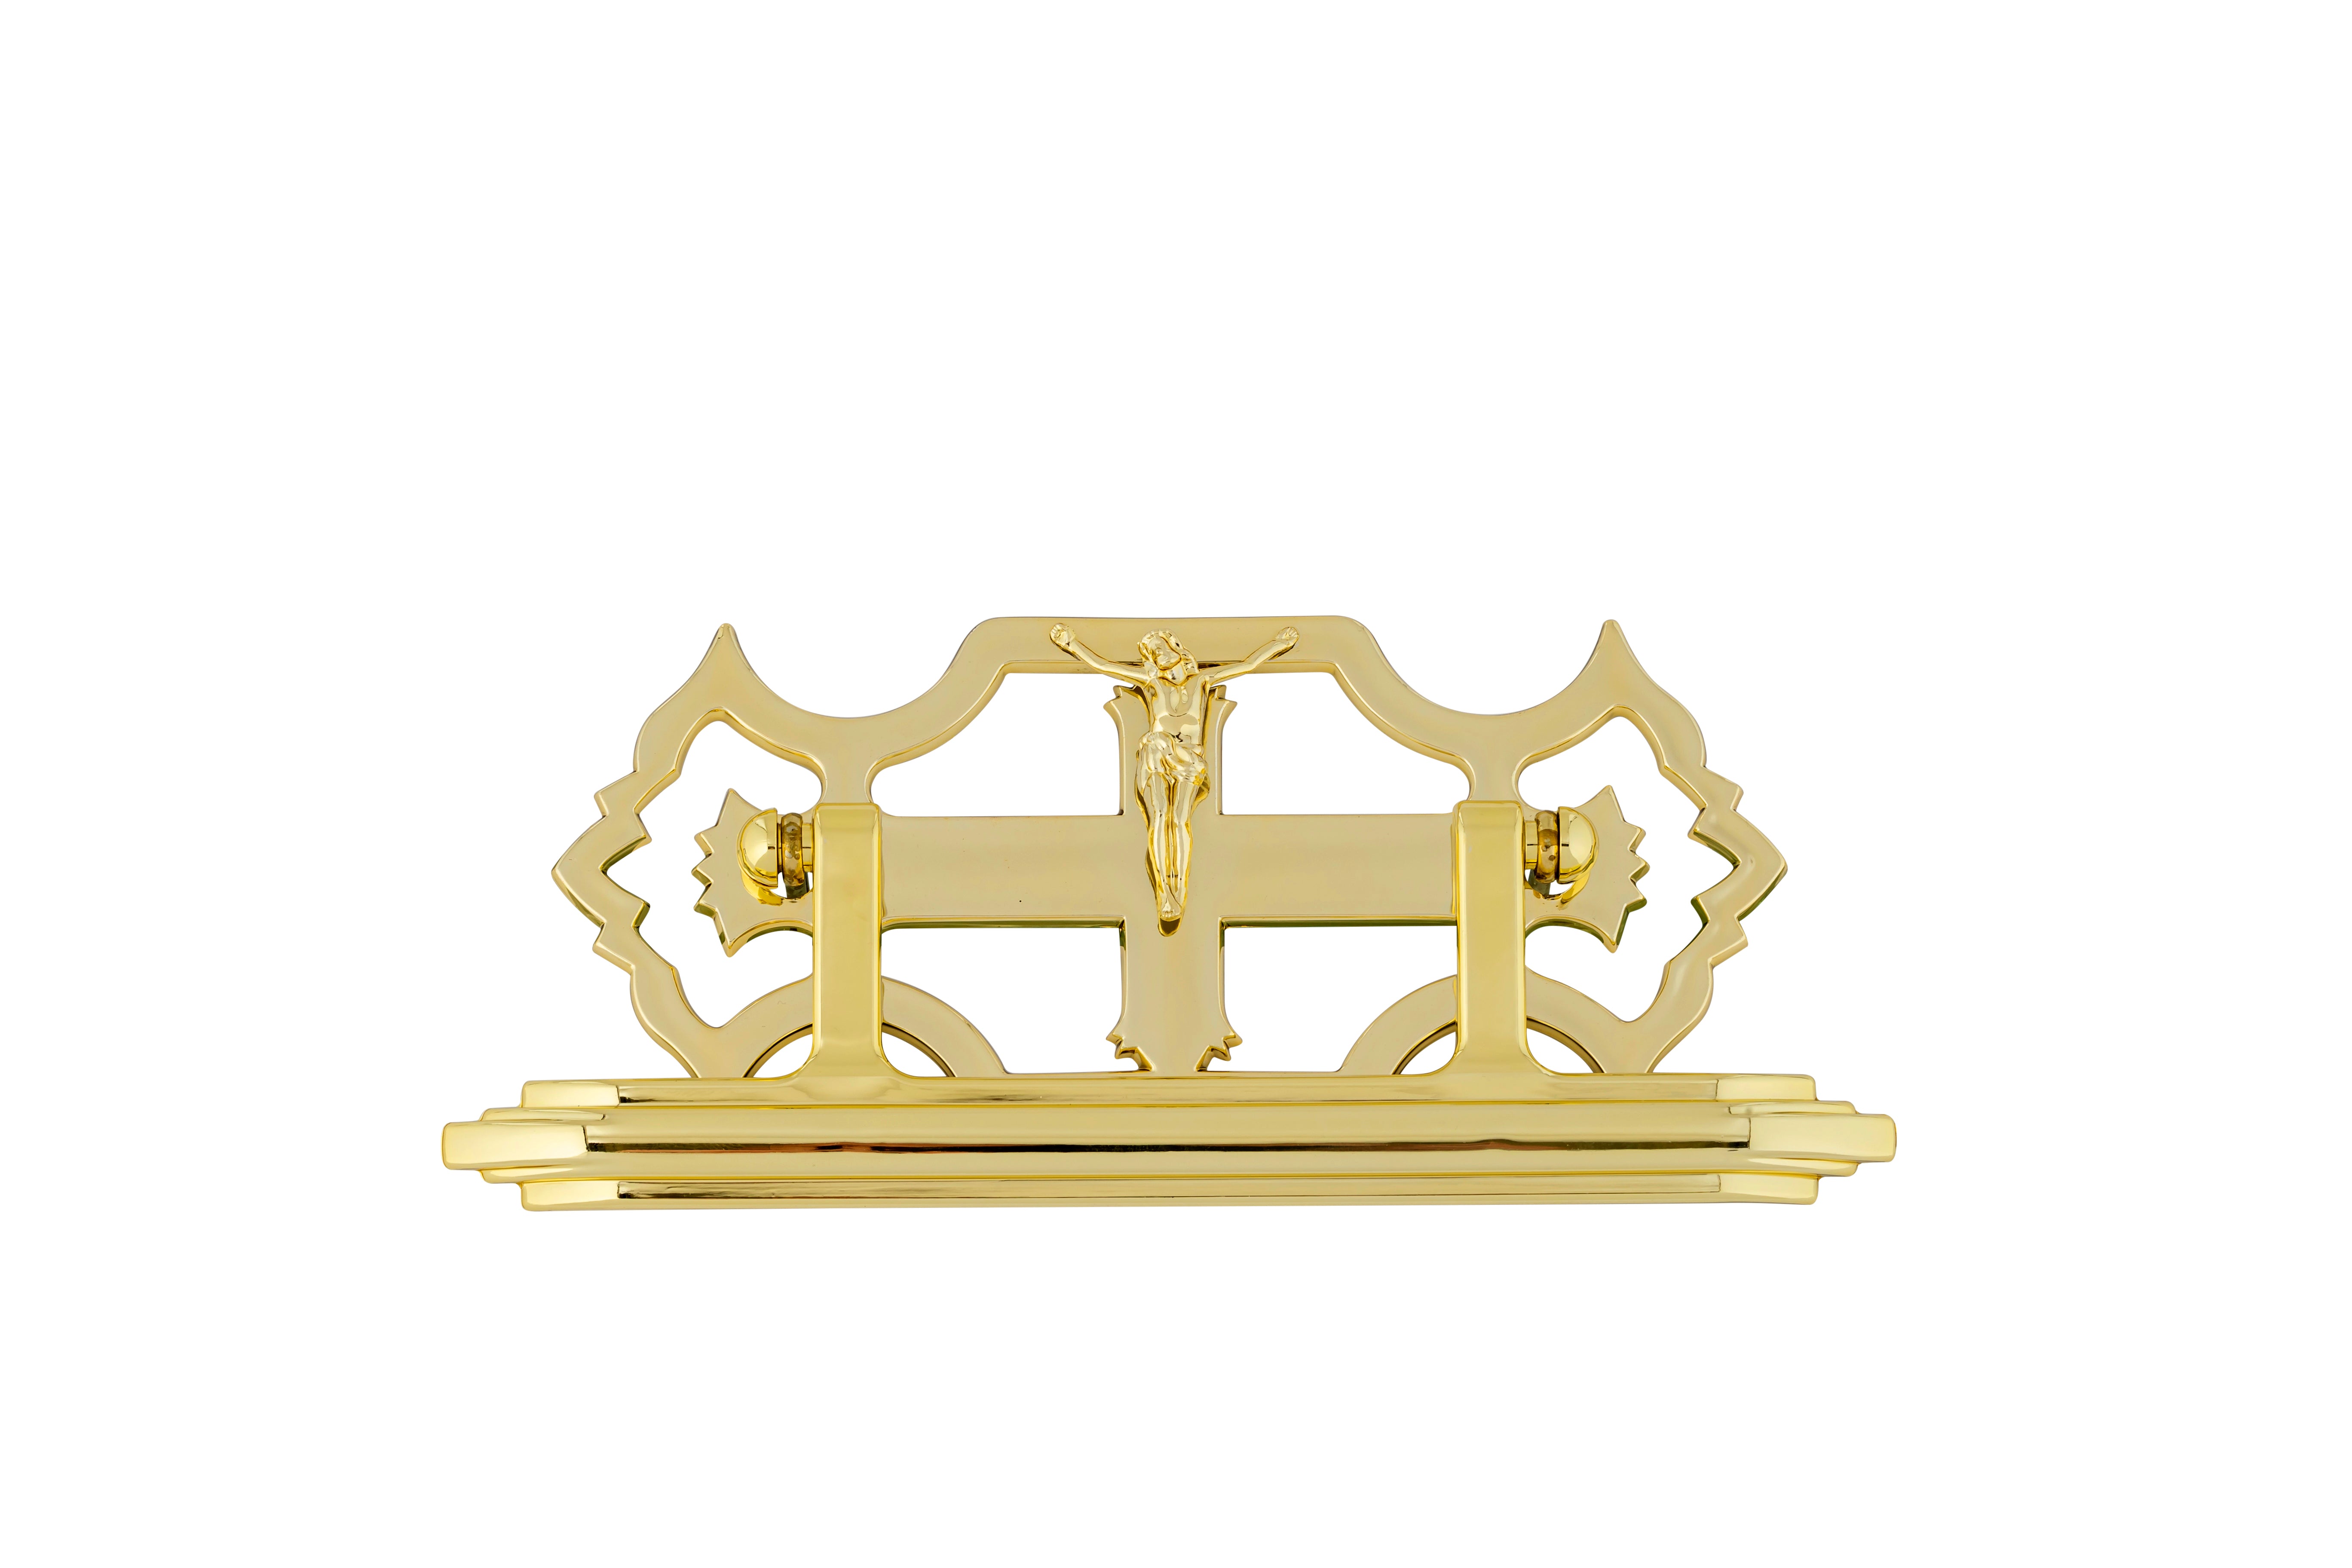 Split Metal Cross with Figure Square Metal Handle Gold - 6 piece set